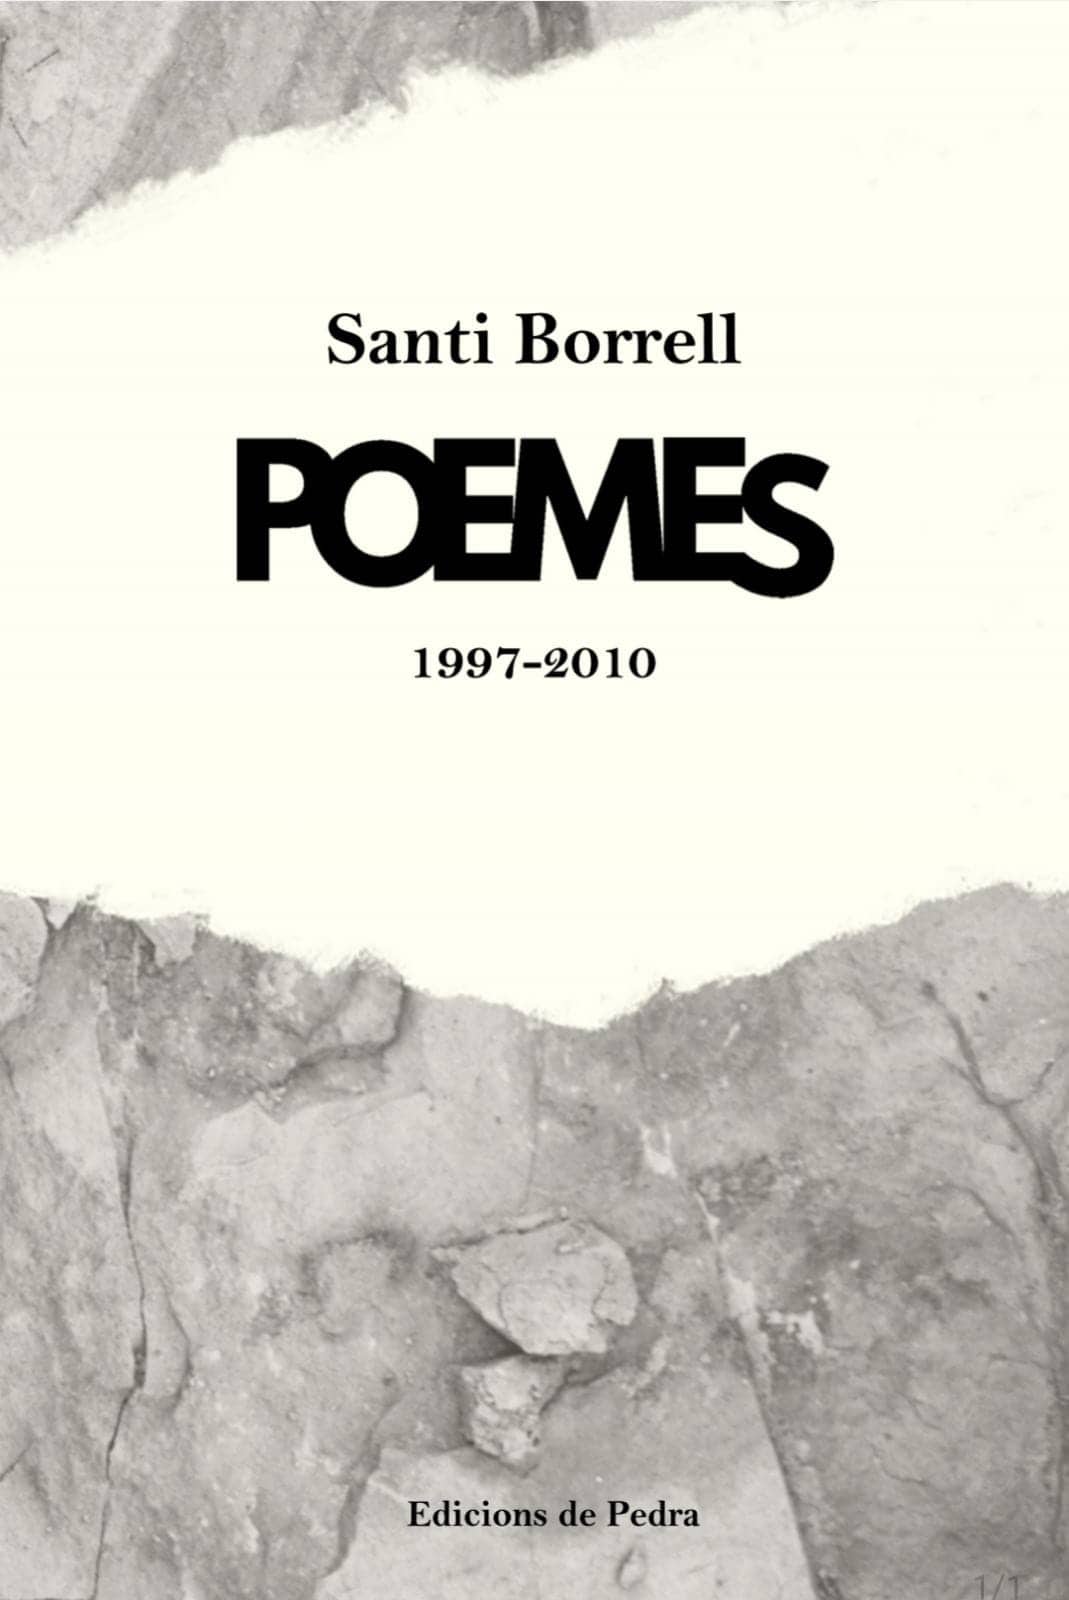 poemes santi borrell